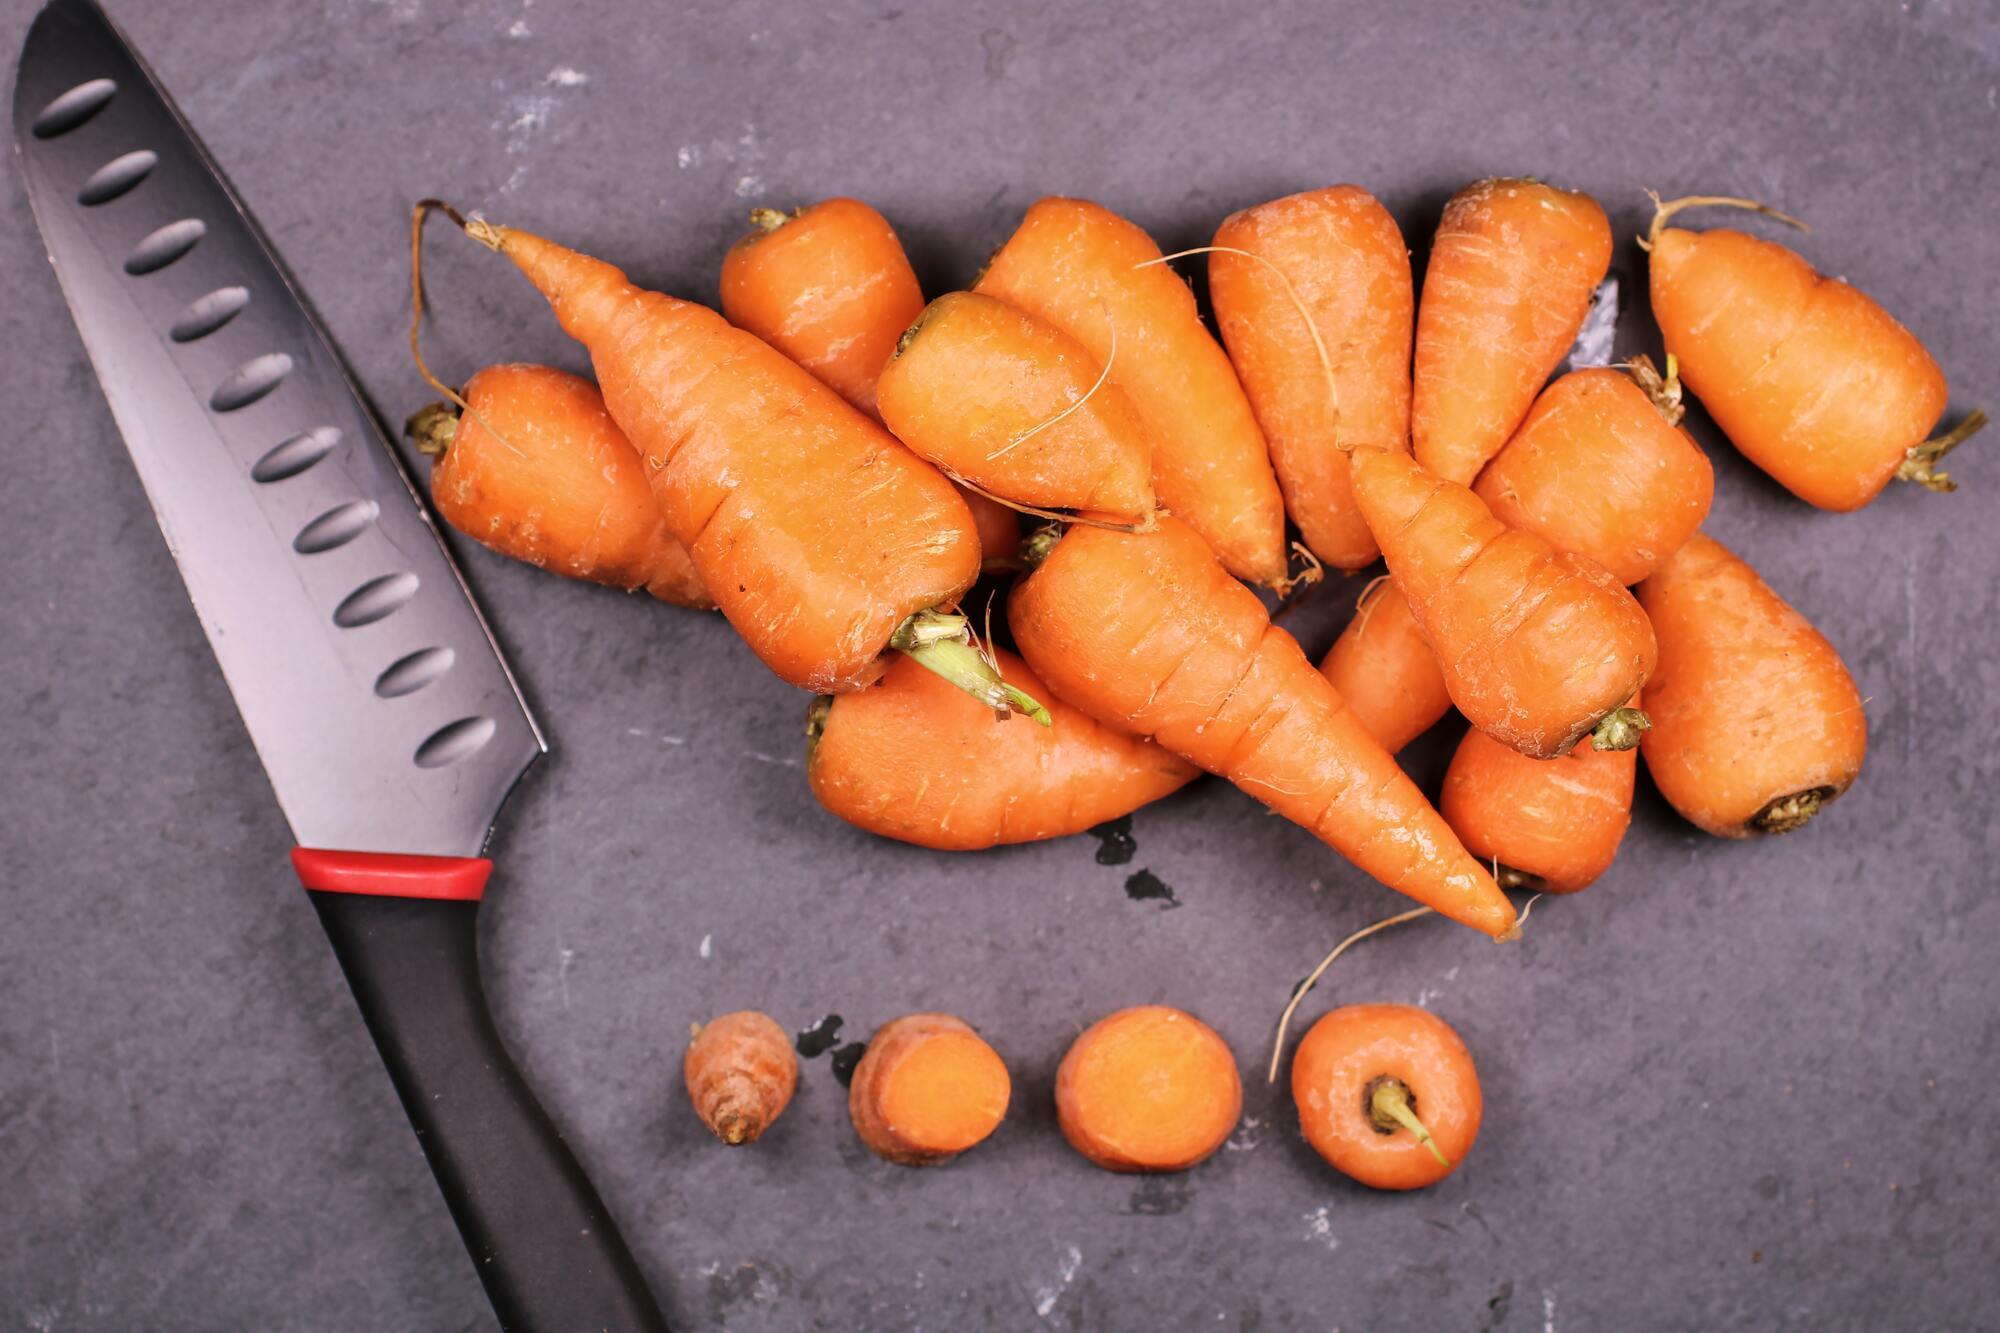 Carrots for garnish